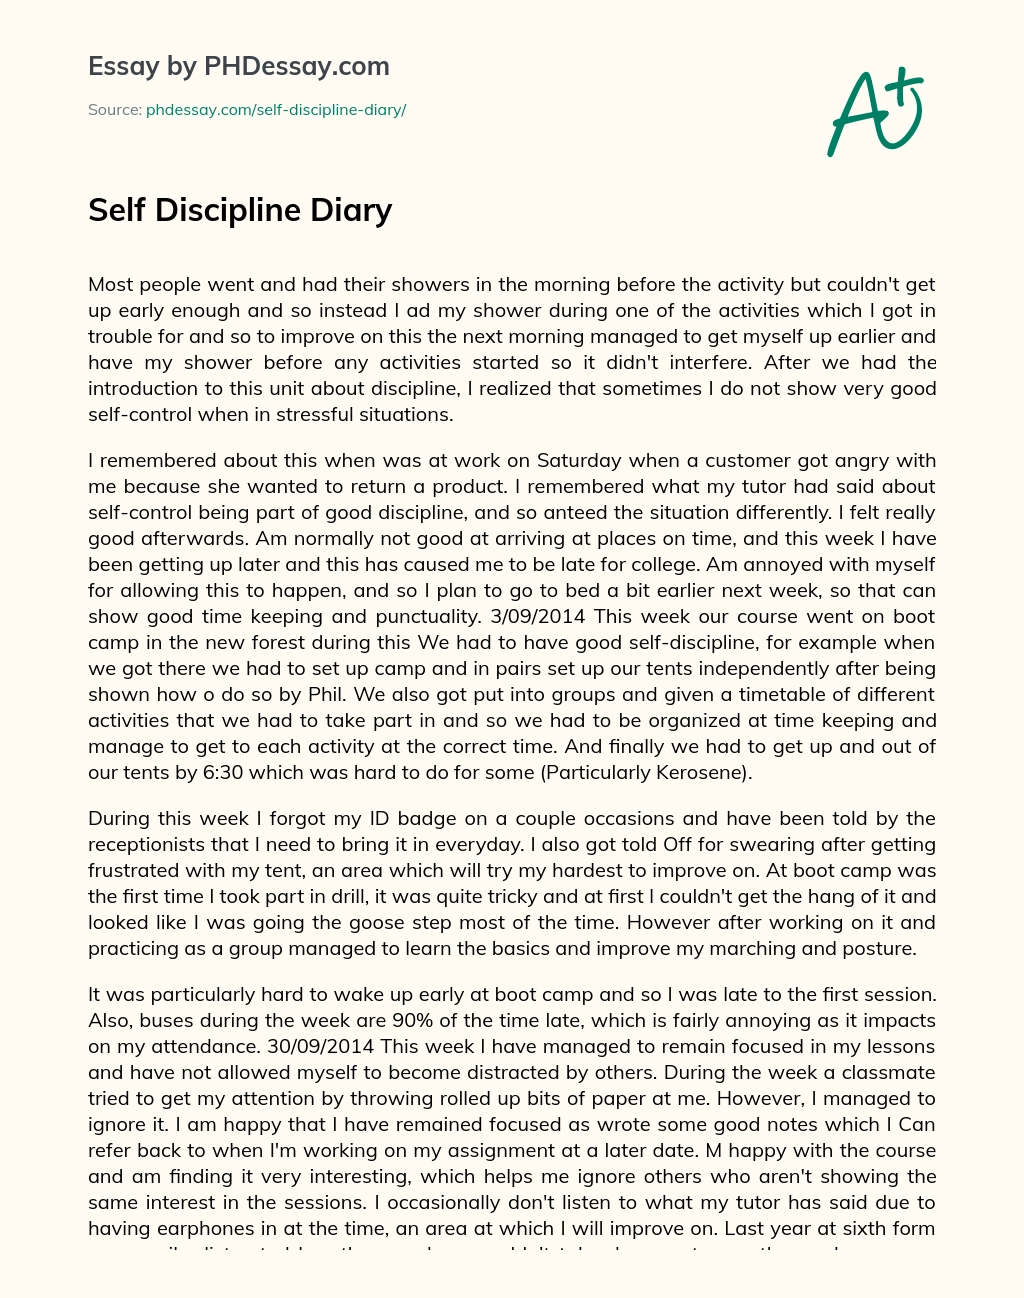 Self Discipline Diary essay